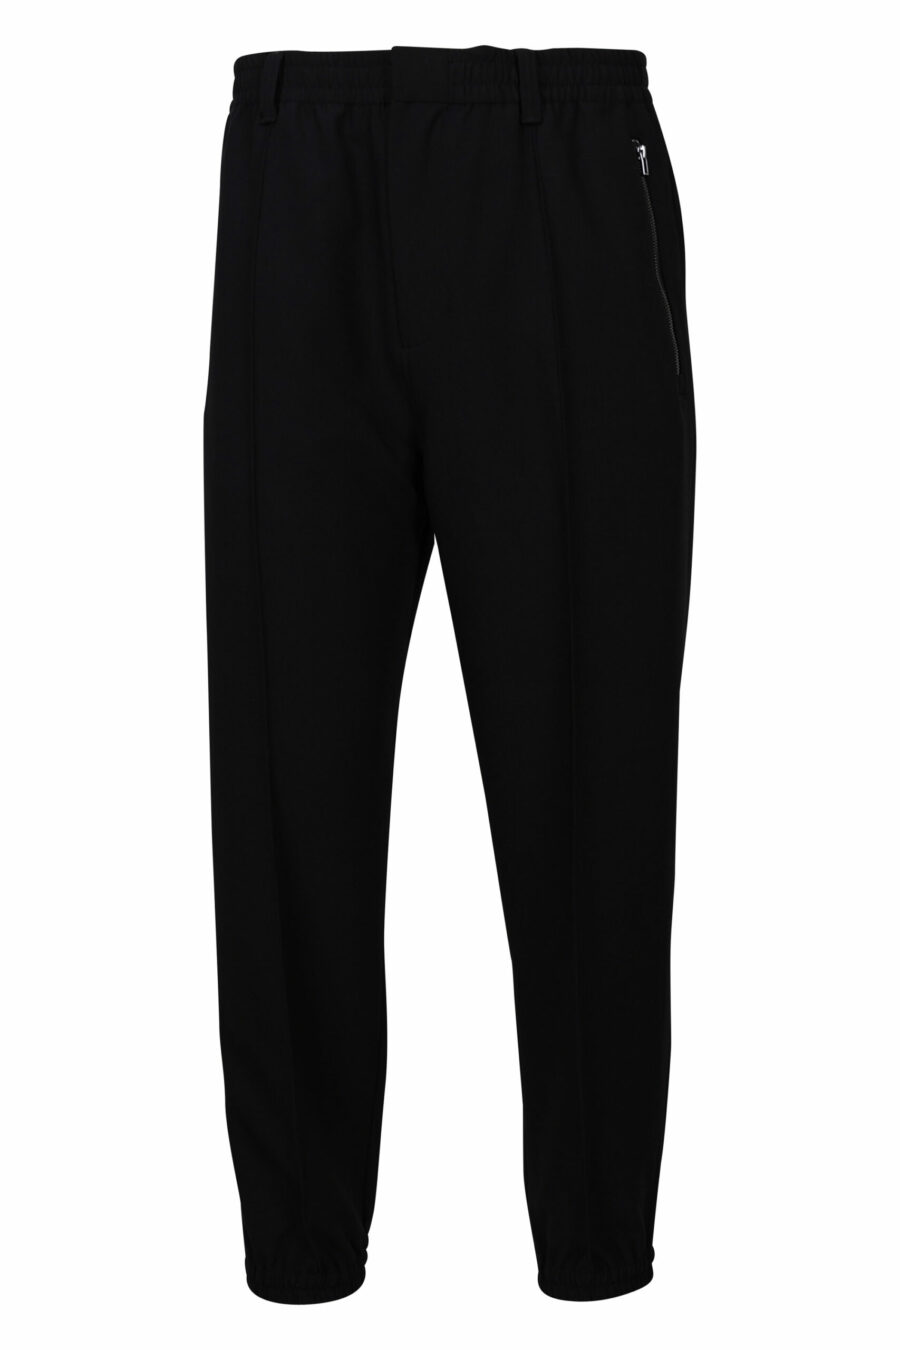 Pantalon noir avec mini-logo - 8057767410278